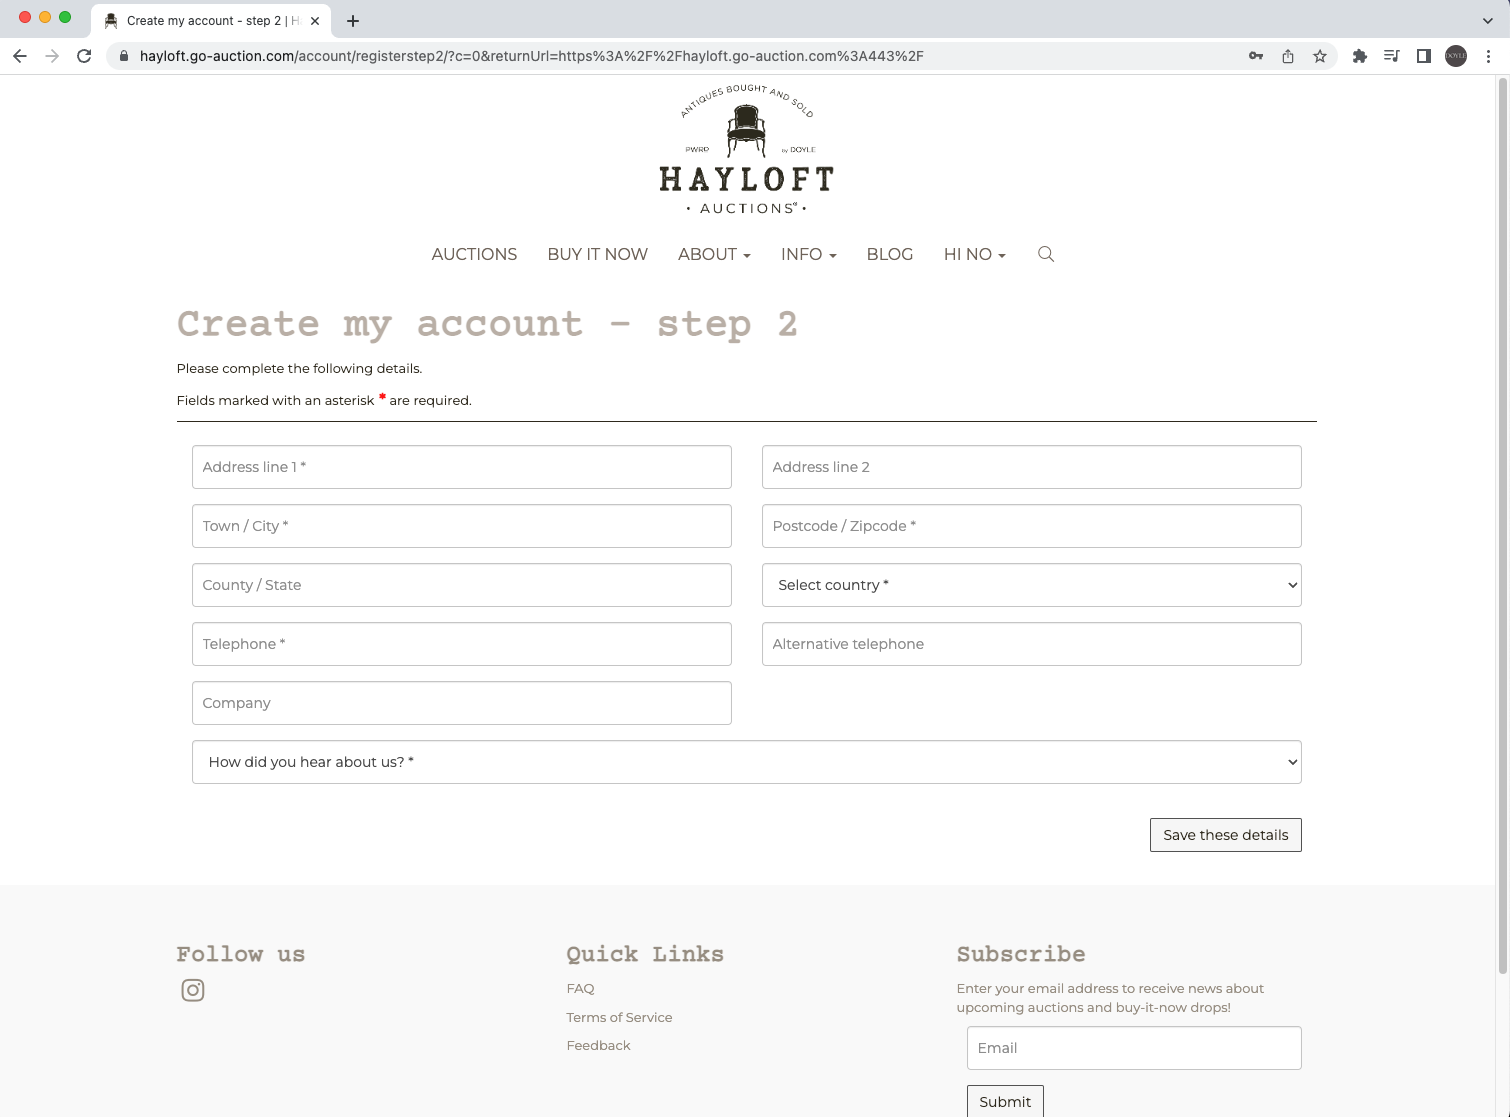 Screenshot of Account Creation Page 2 on Hayloft